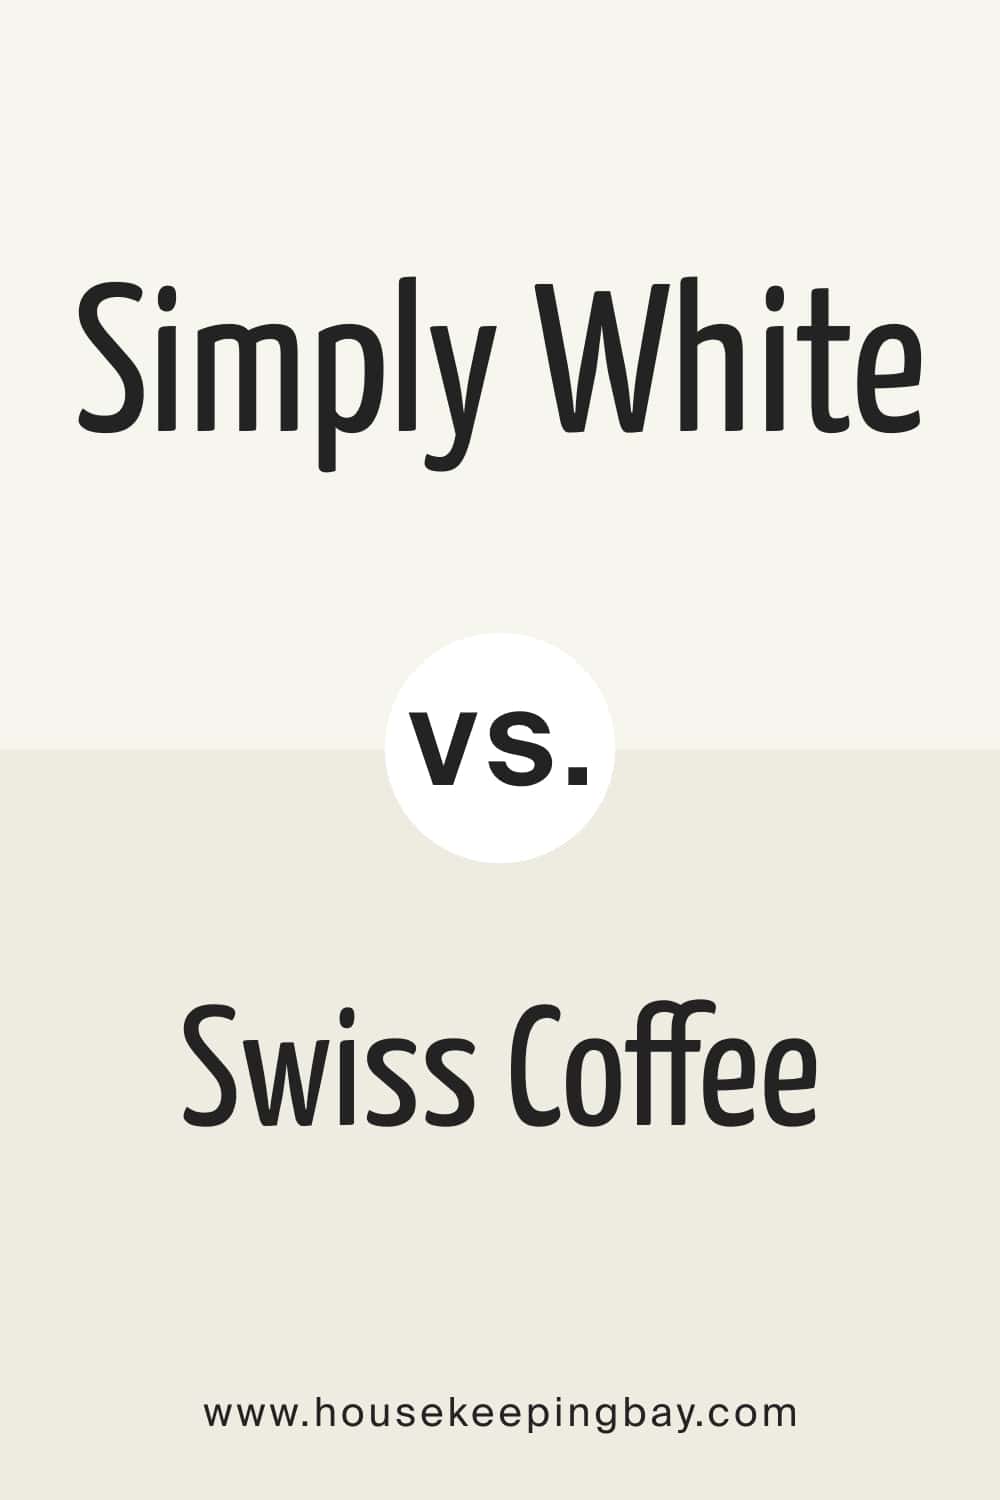 Simply White vs. Swiss Coffee